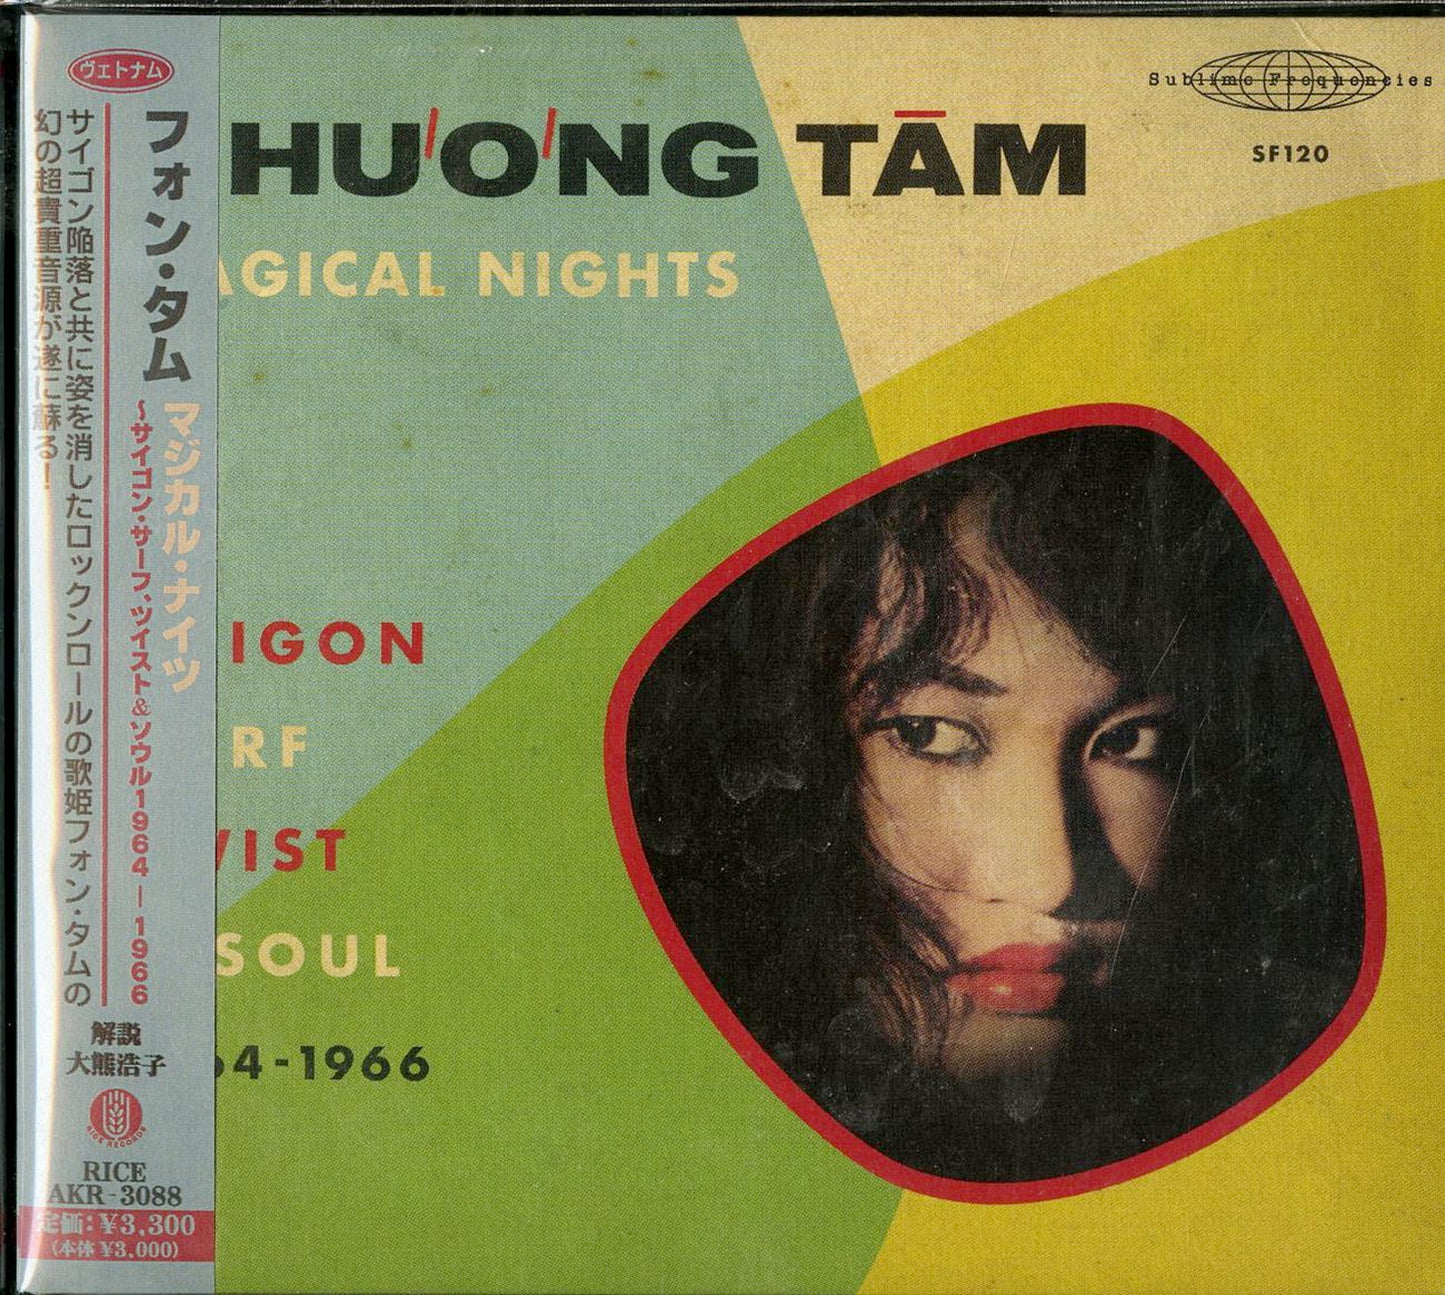 Phuong Tam - Magical Nights Saigon Surf. Twist & Soul (1964-1966) - Japan  CD